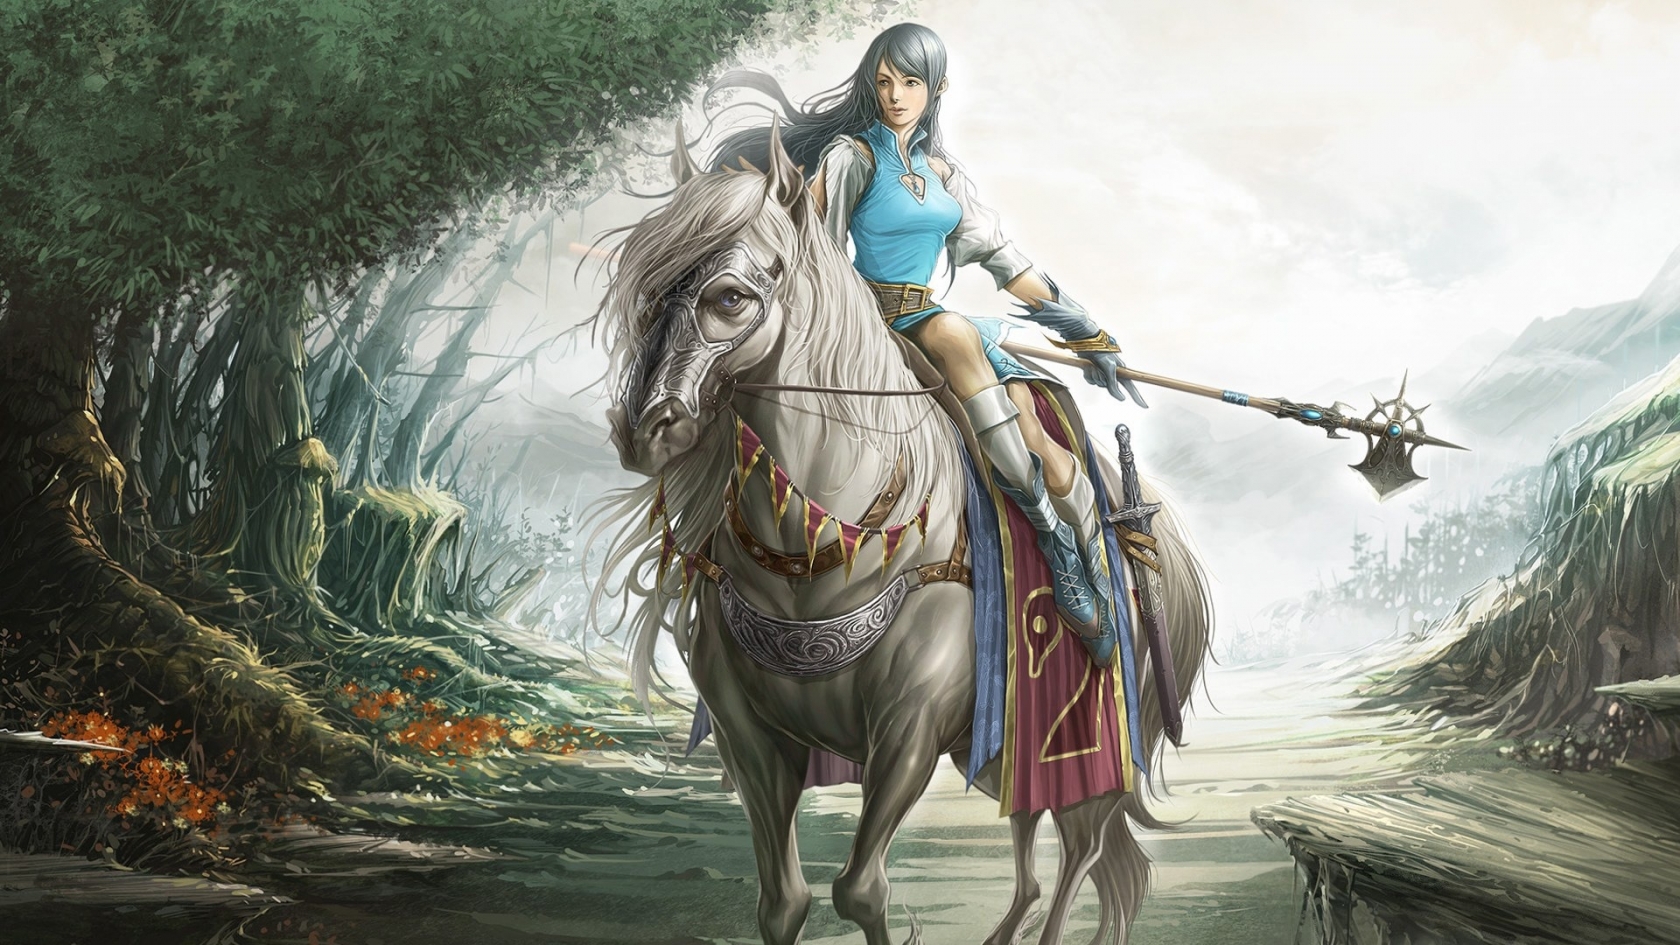 Fantasy Girl Rider for 1680 x 945 HDTV resolution